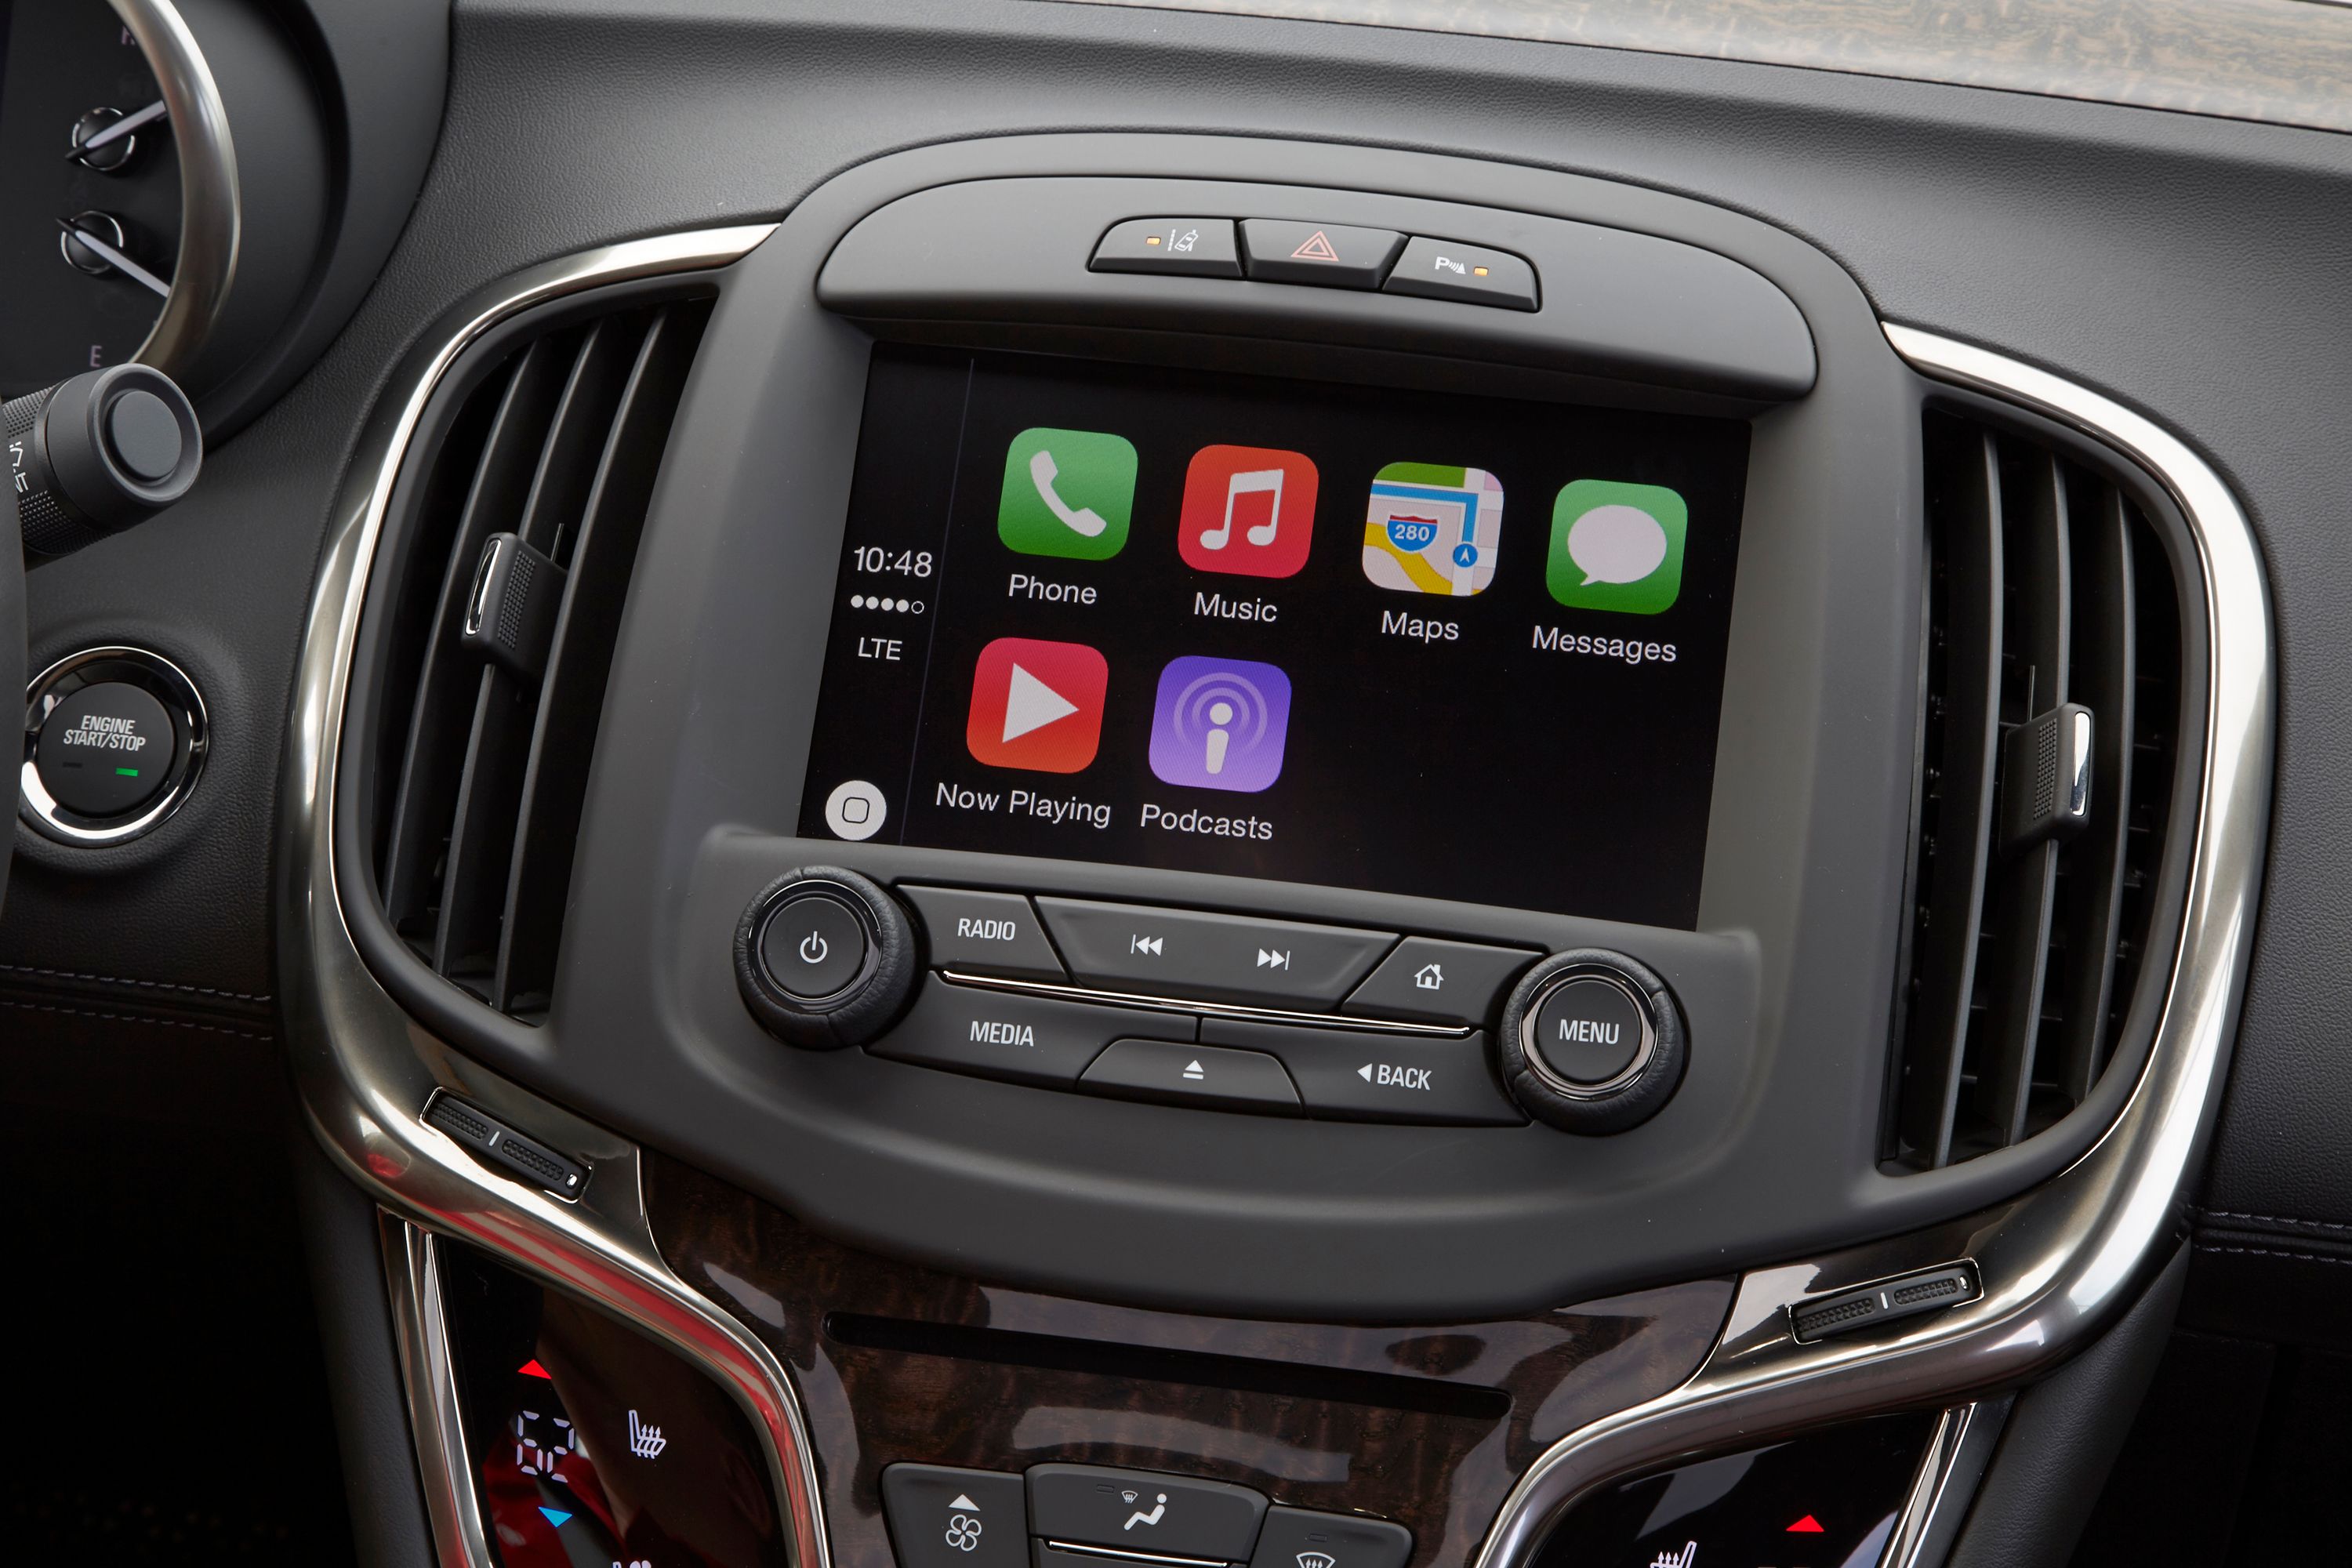 Apple CarPlay is standard in the 2016 model year Buick Regal